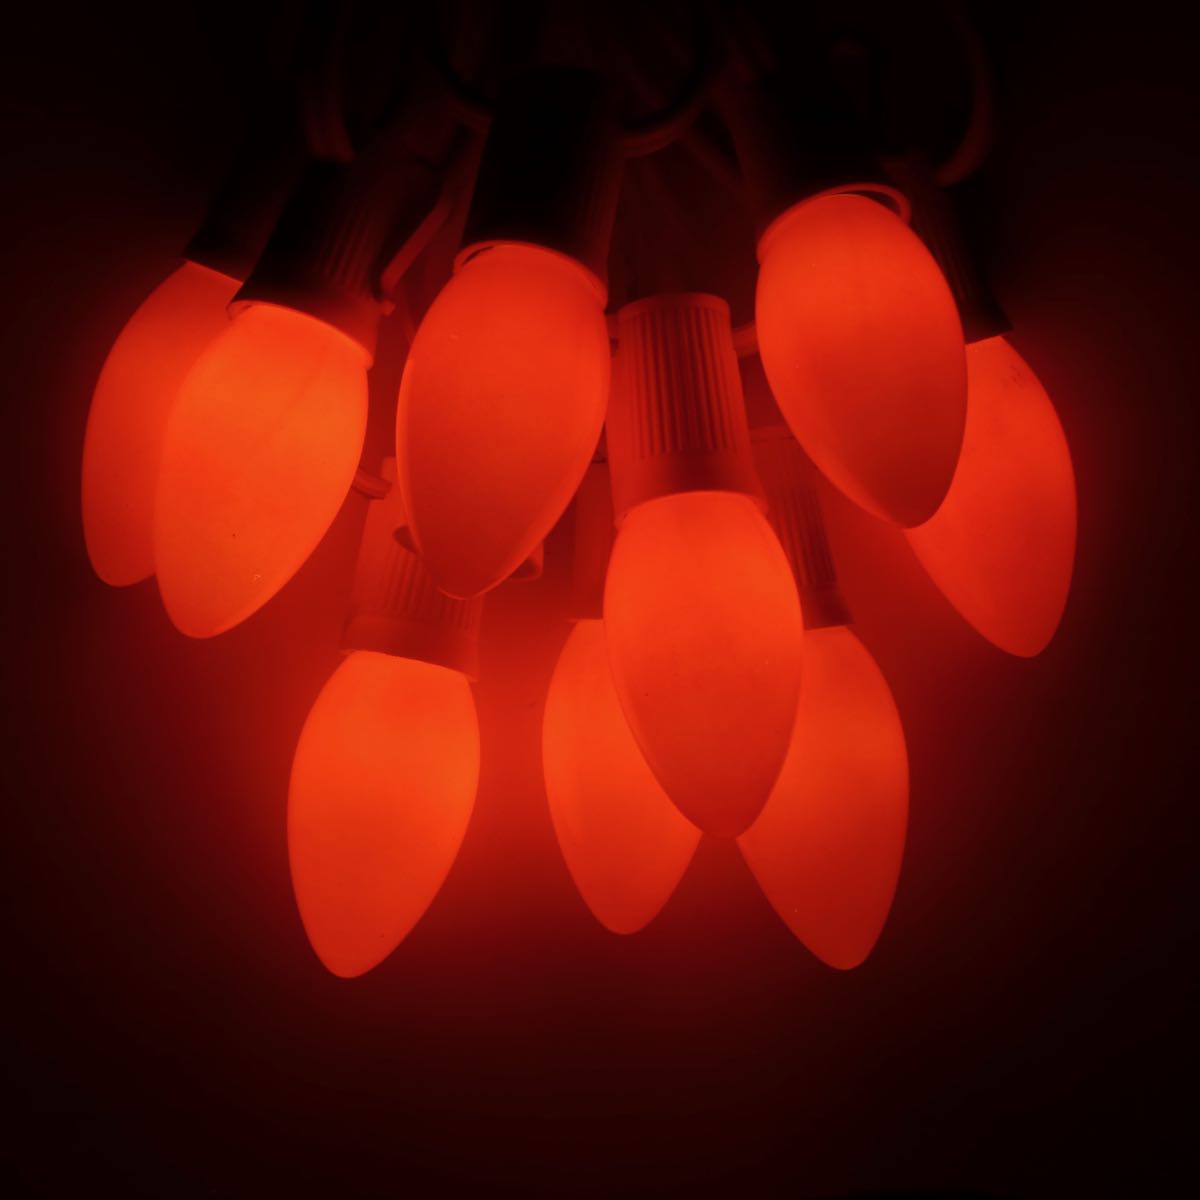 C9 Orange Opaque Glass Bulbs E17 Bases